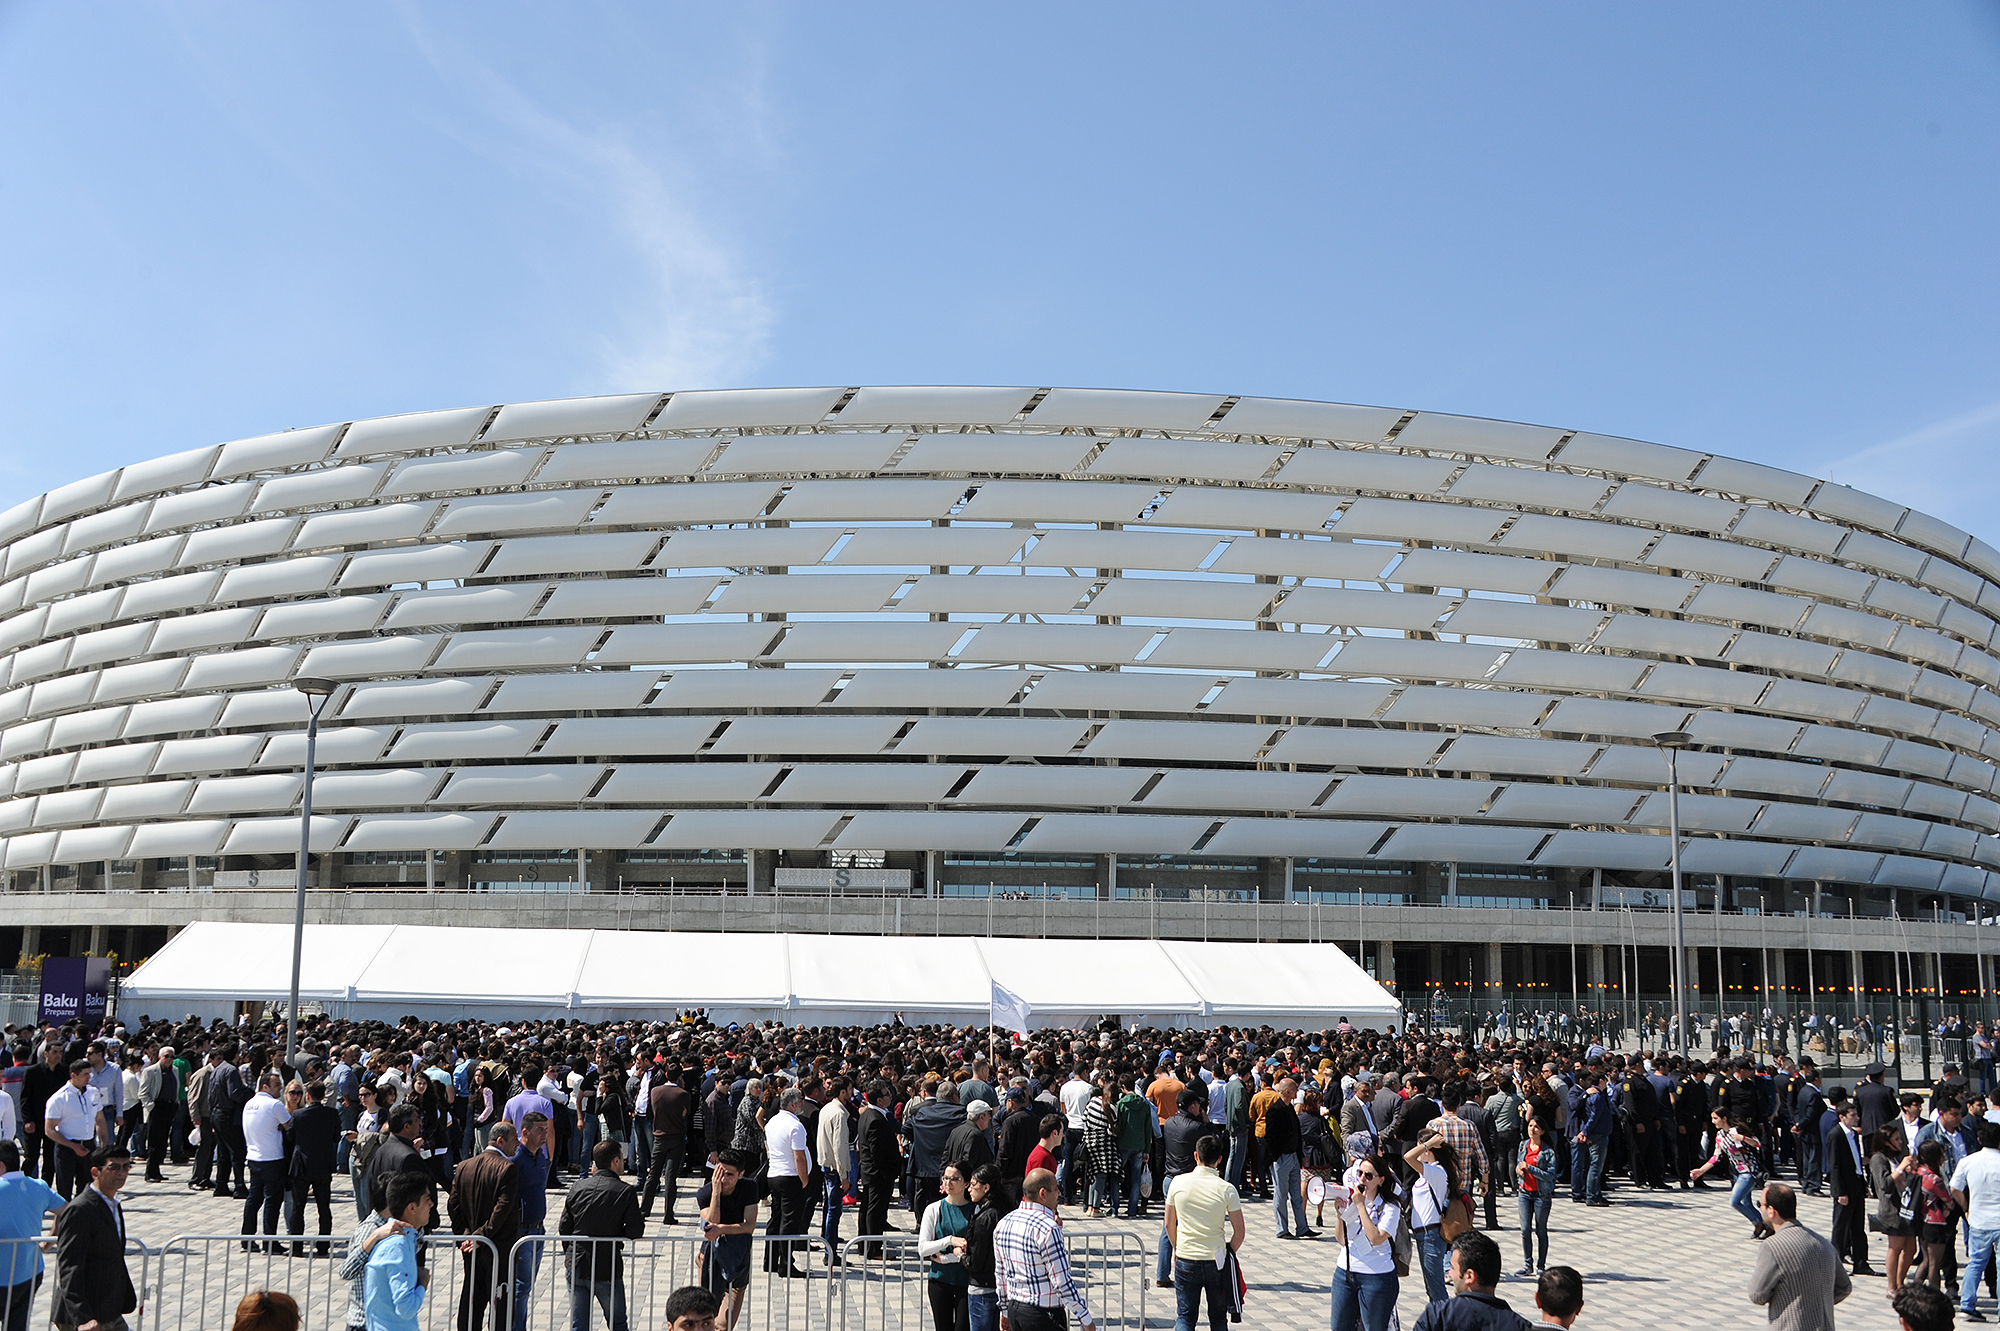 Baku 2015 holds test event at Olympic Stadium